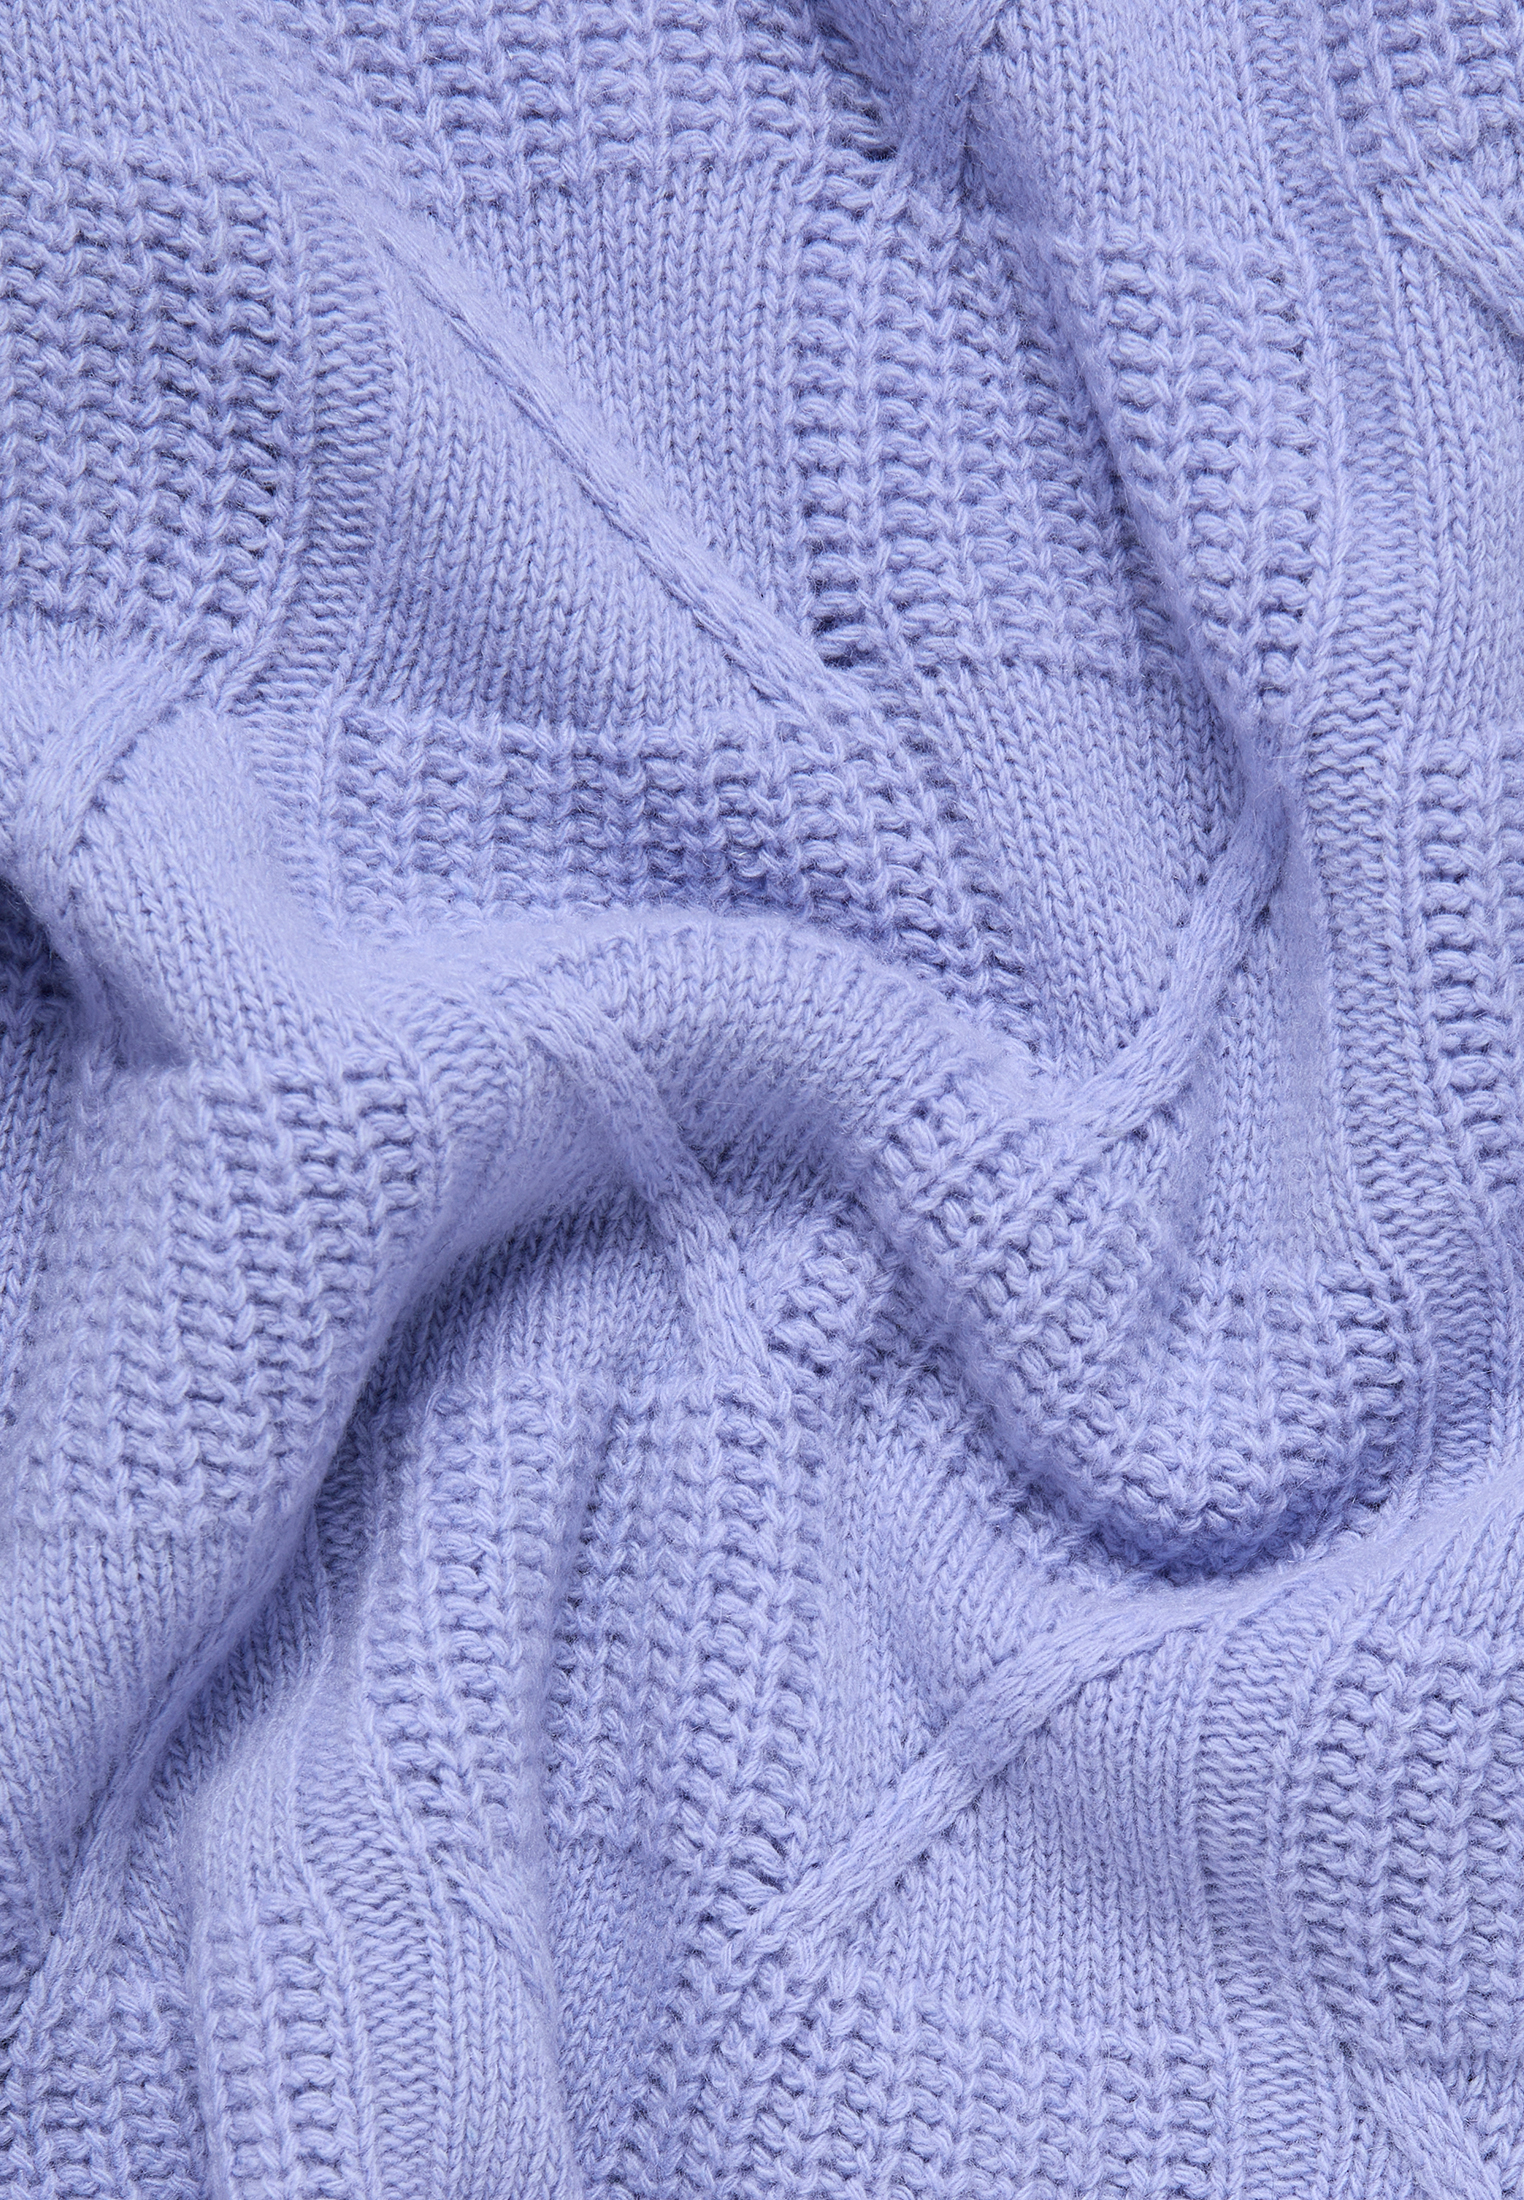 Knitted jumper in sky blue plain